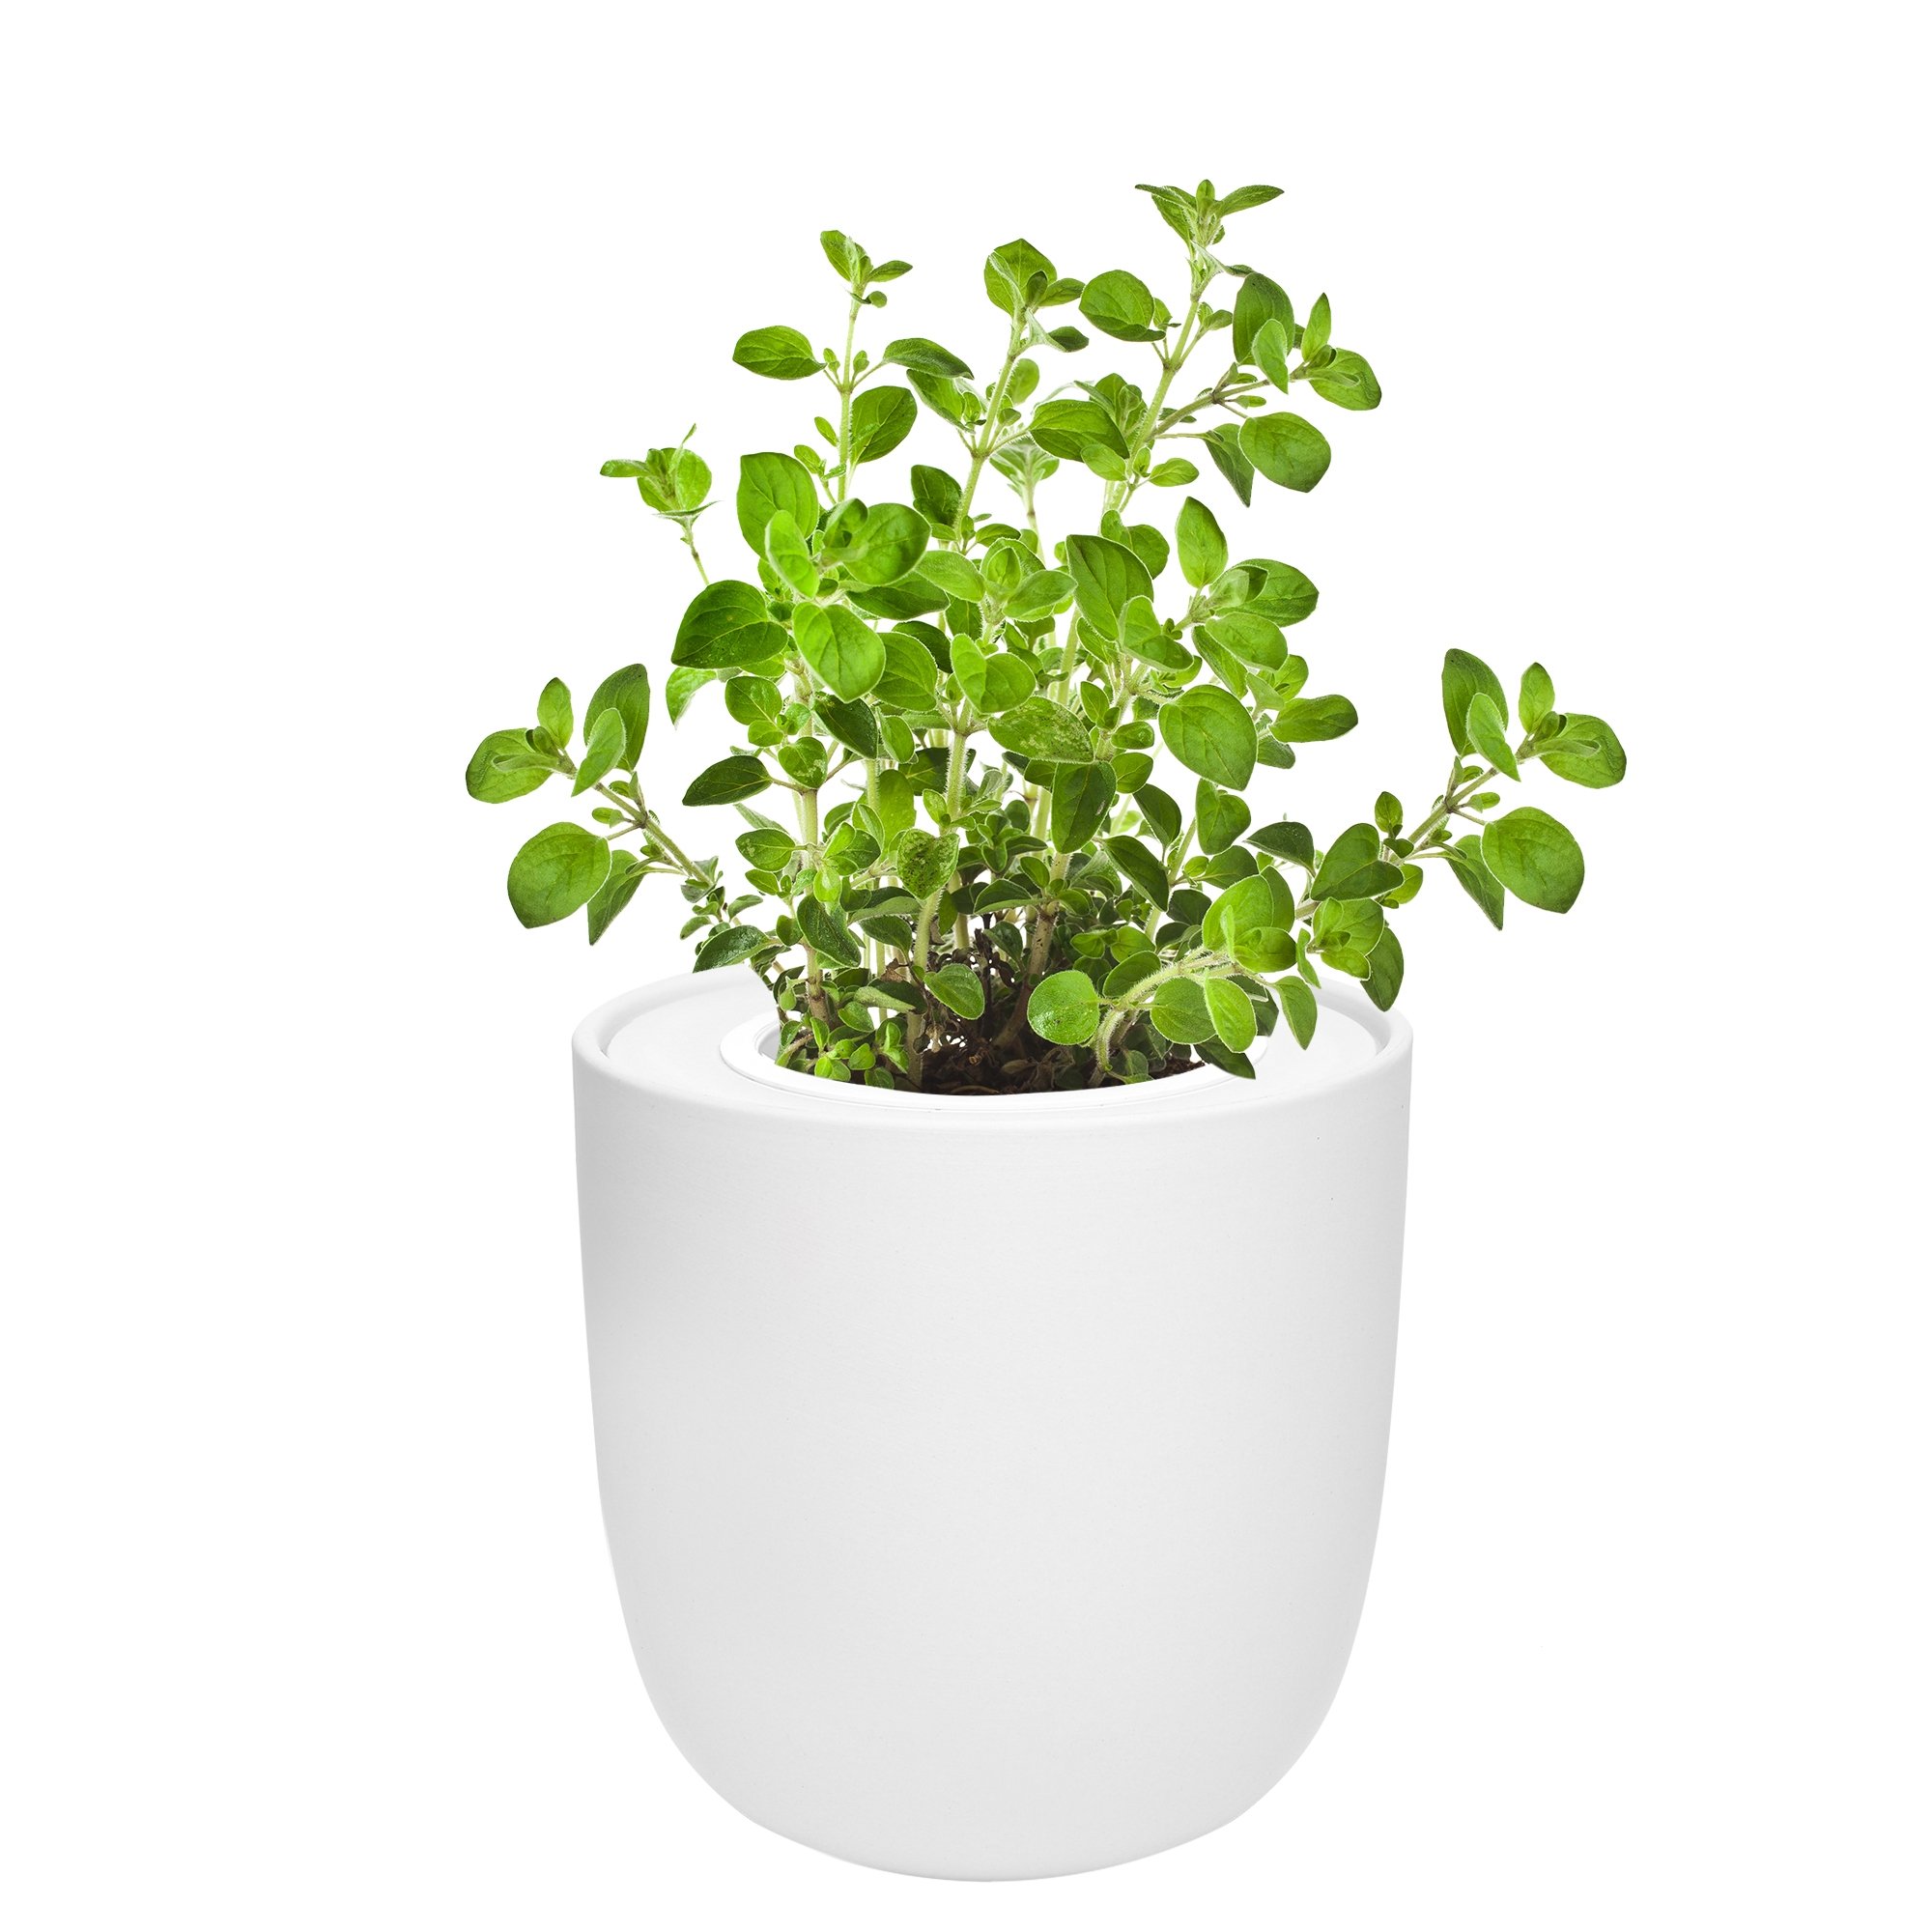 Oregano White Ceramic Pot Hydroponic Growing Kit with Organic Seeds